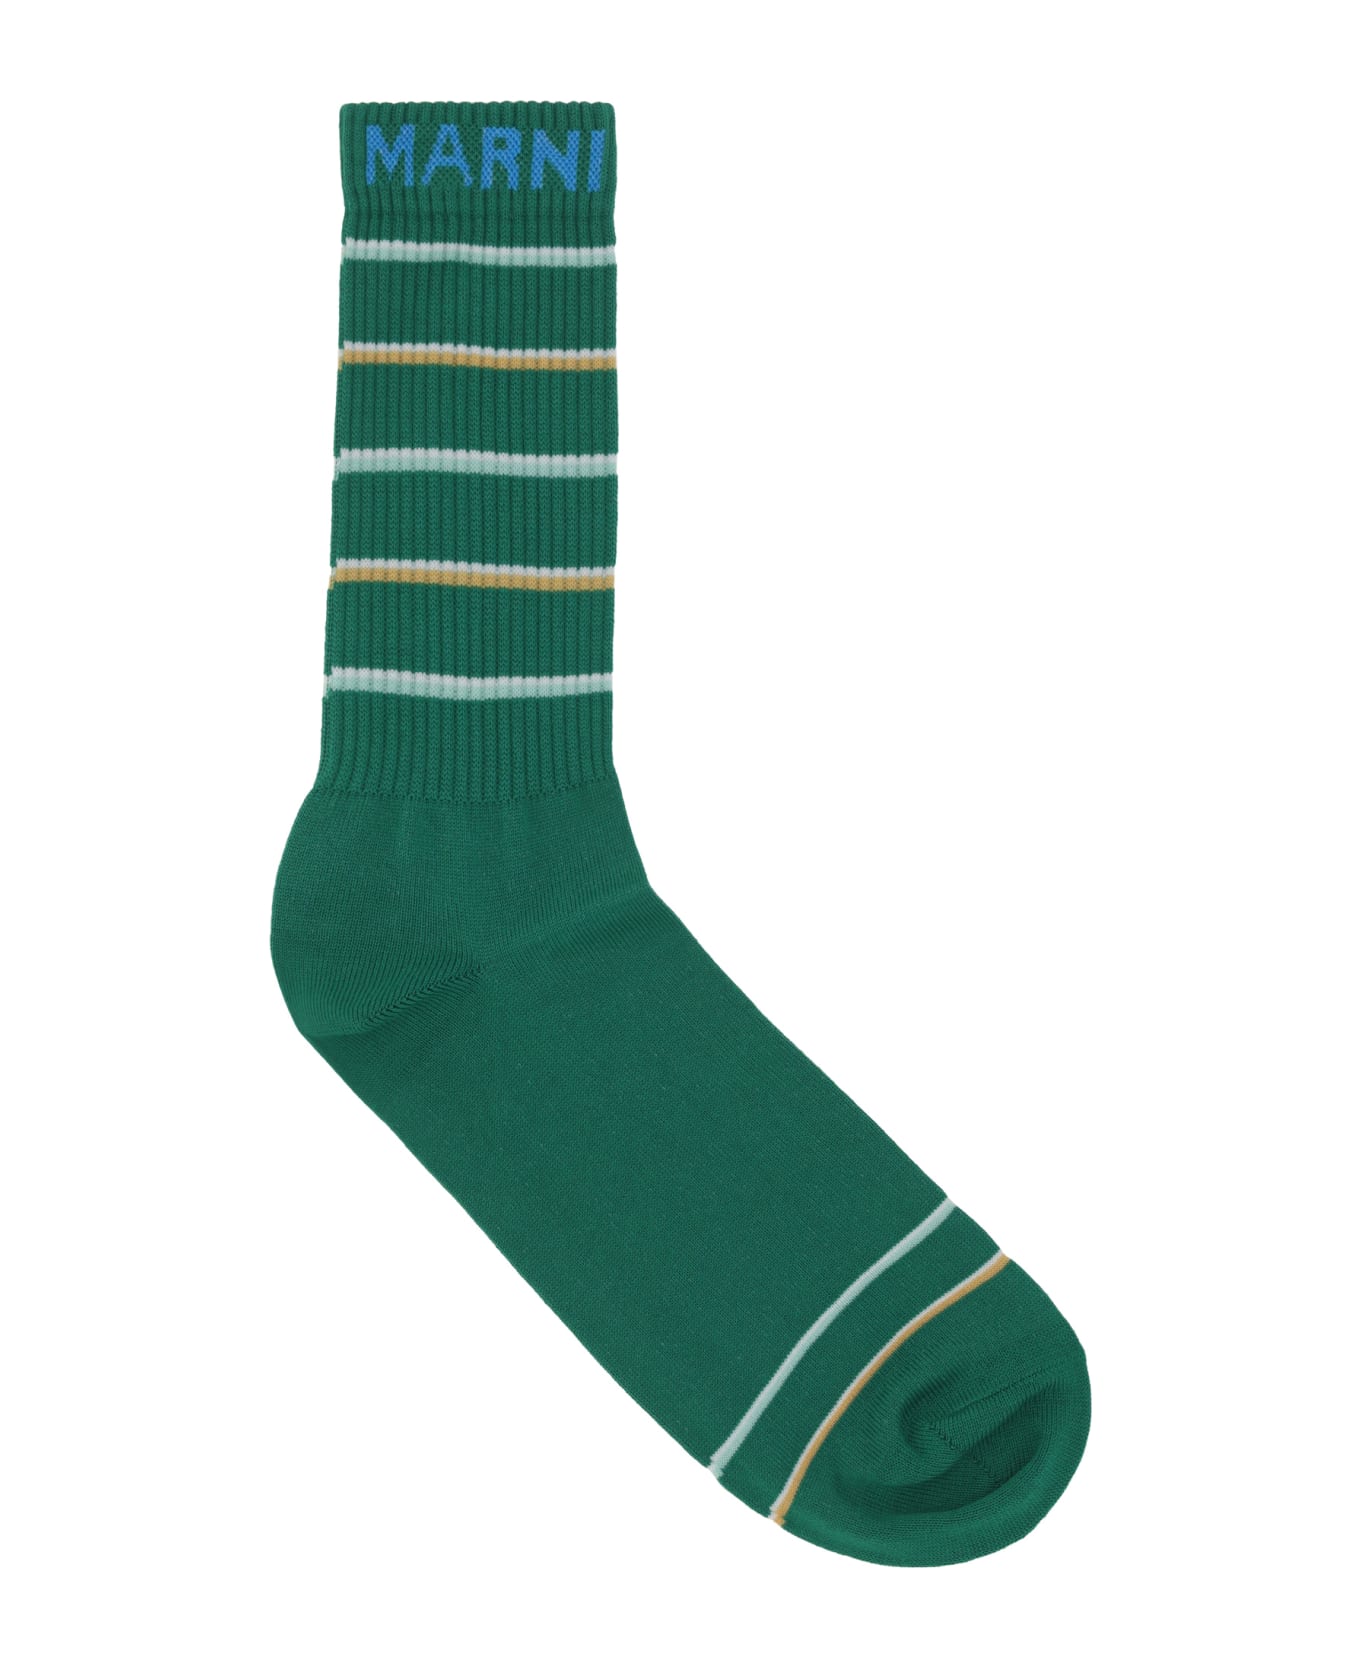 Marni Socks - Sea Green 靴下